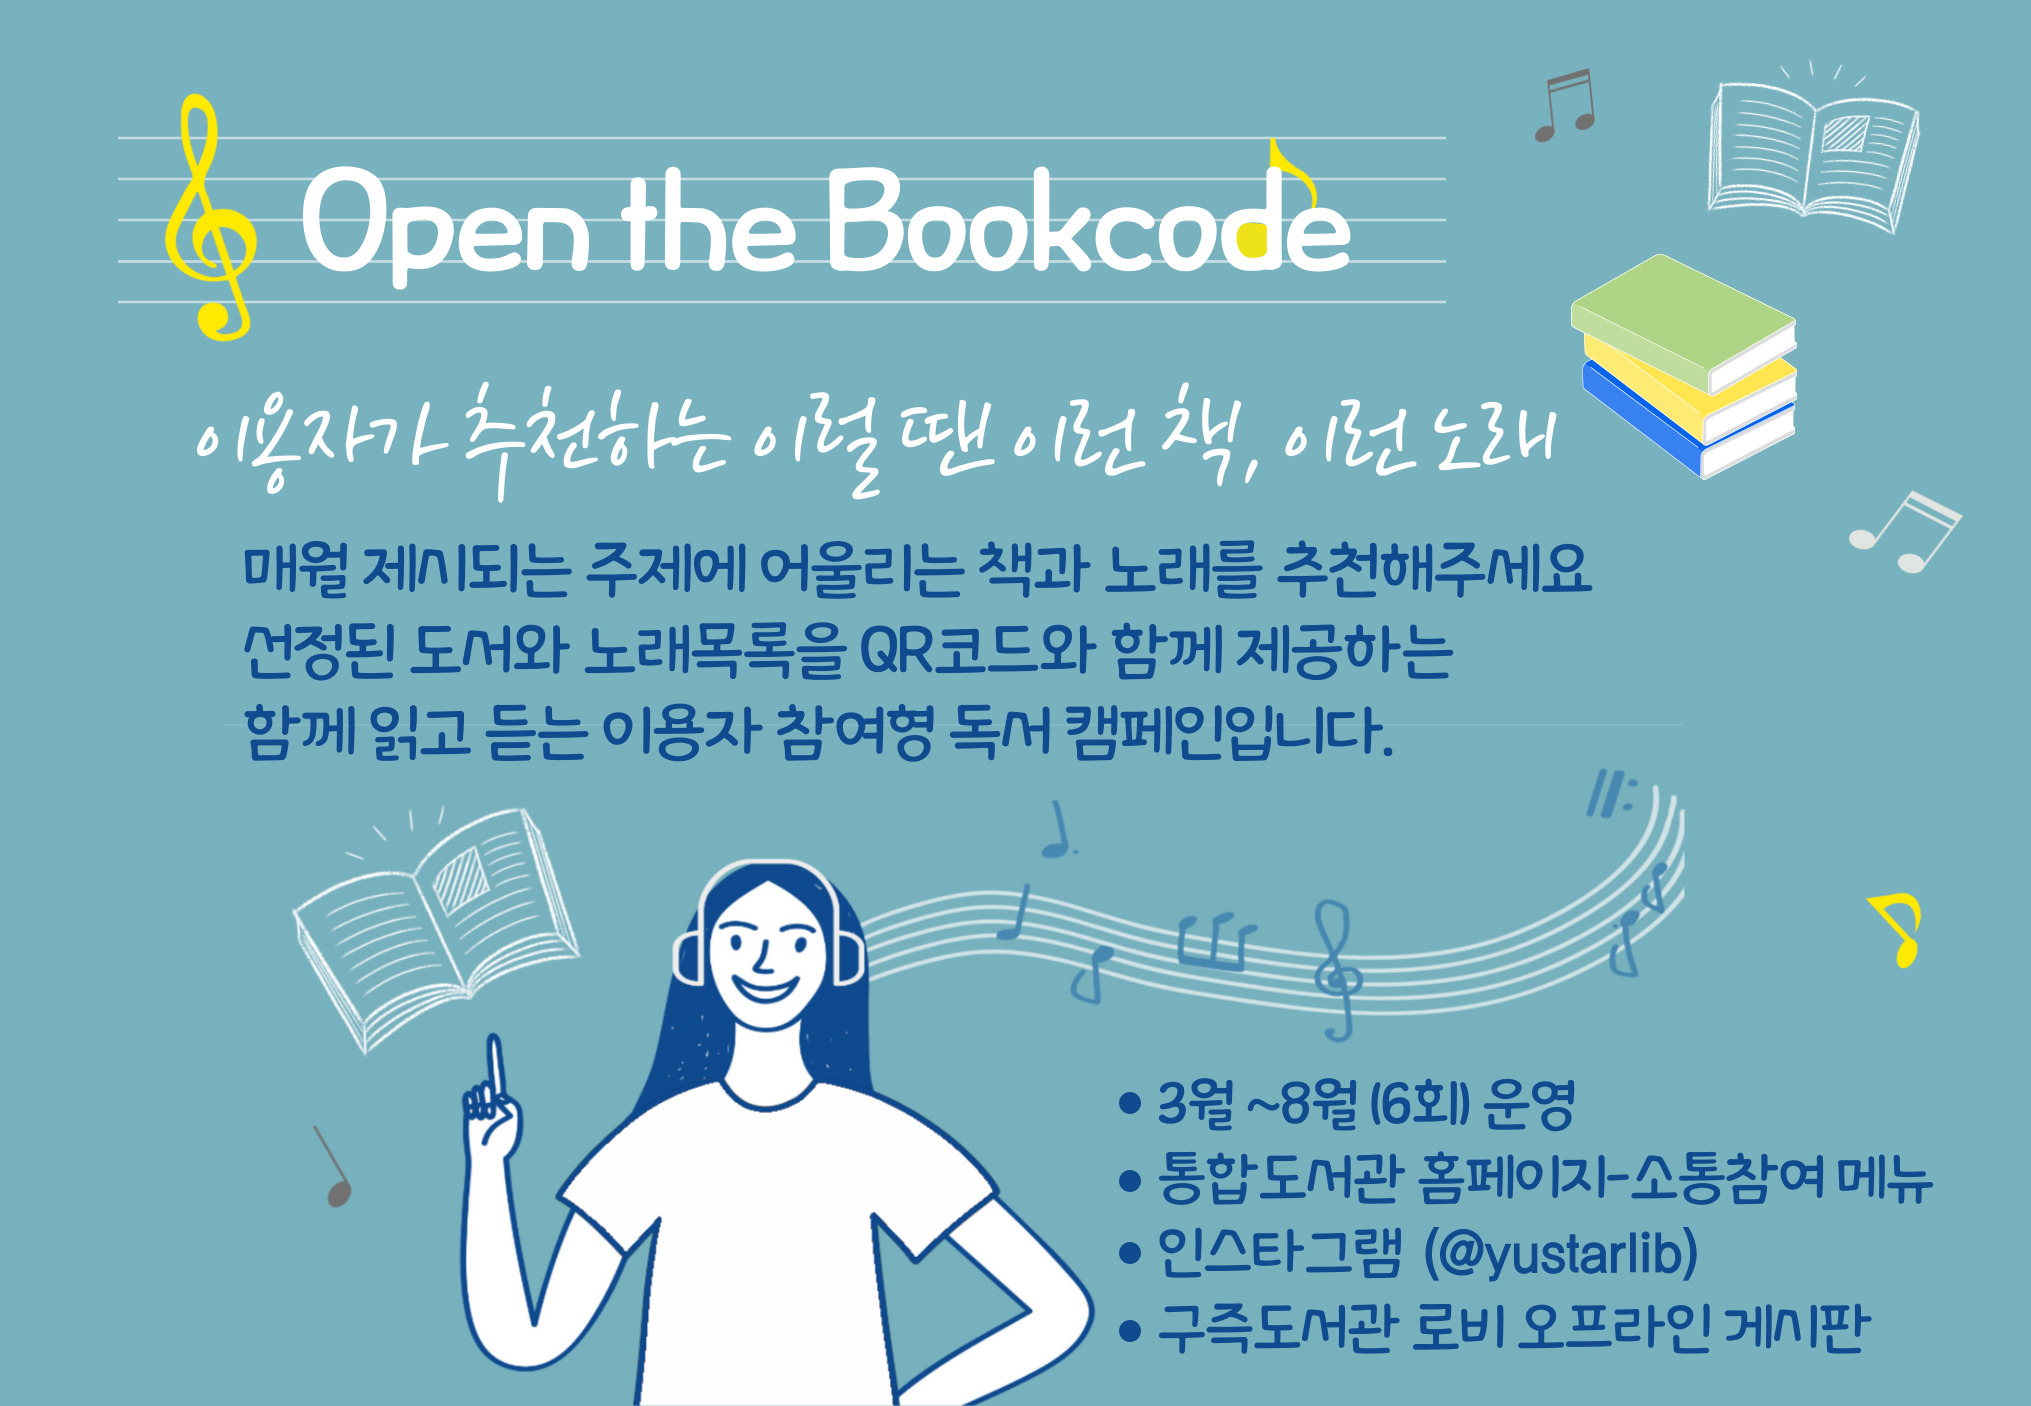 Open the Bookcode
이용자가 추천하는 이럴 땐 이런 책, 이런 노래
매월 제시되는 주제에 어울리는 책과 노래를 추천해주세요
선정된 도서와 노래 목록을 QR코드와 함께 제공하는
함께 읽고 듣는 이용자 참여형 독서캠페인 입니다.
3월~8월(6회) 운영
통합도서관 홈페이지-소통참여 메뉴
인스타그램(@yustarlib)
구즉도서관 로비 오프라인 게시판